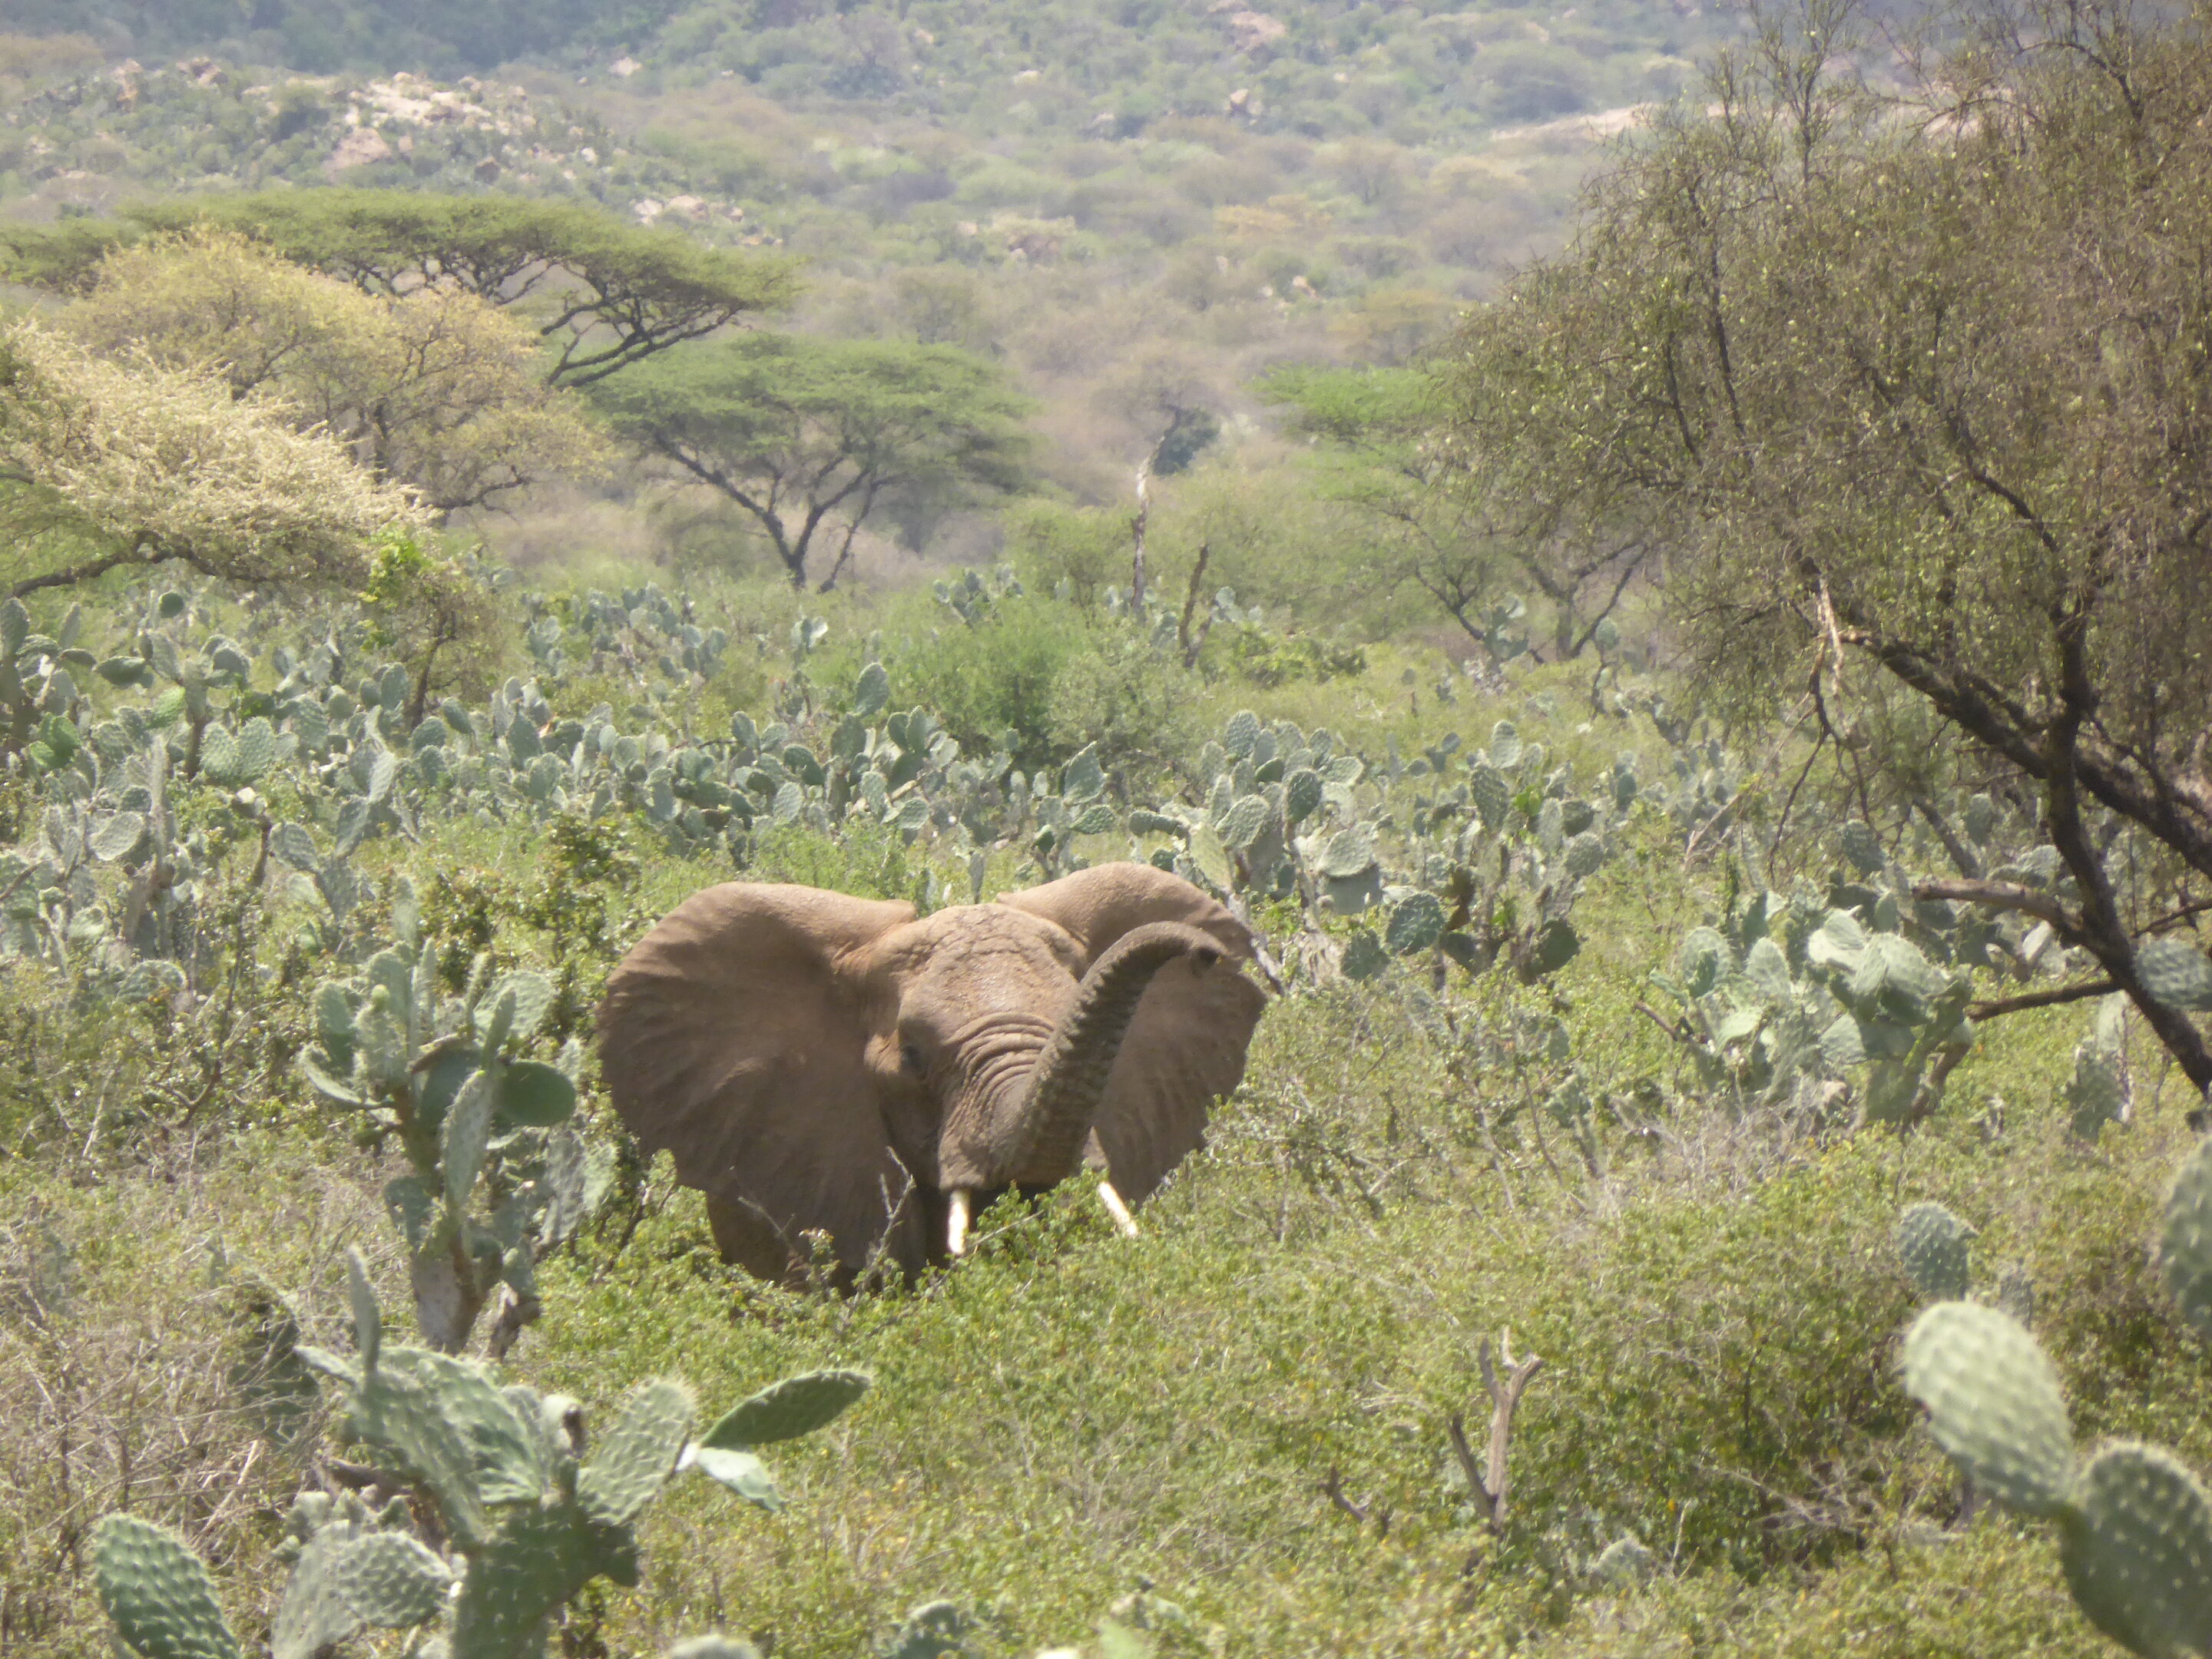 Satellites reveal Ethiopian elephants under threat, study shows ...